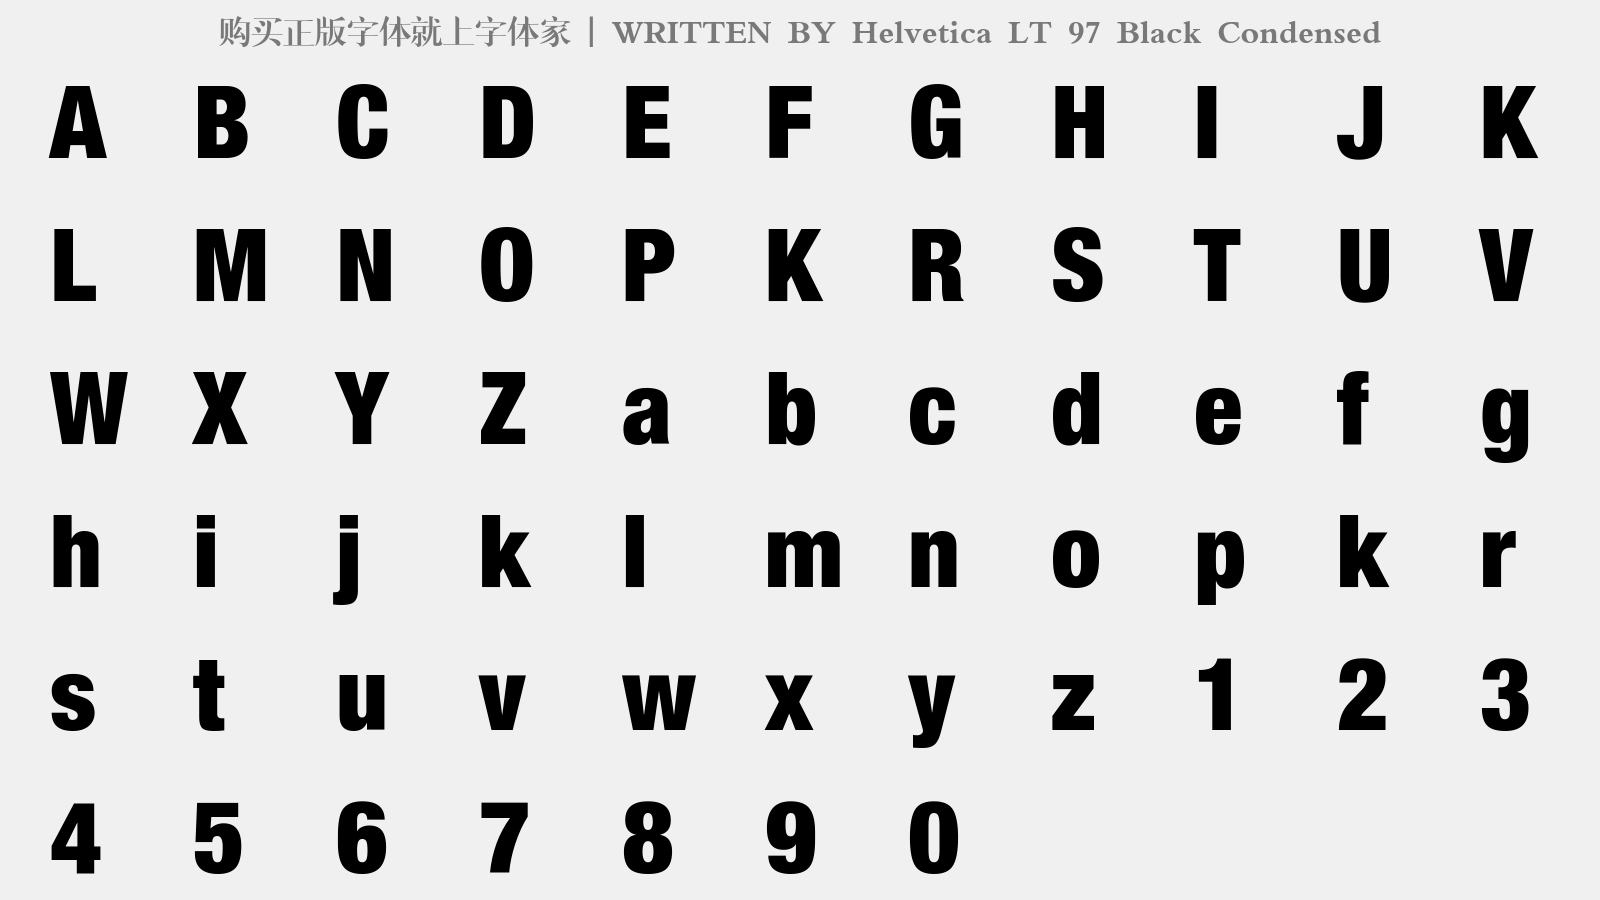 Helvetica LT 97 Black Condensed - 大写字母/小写字母/数字